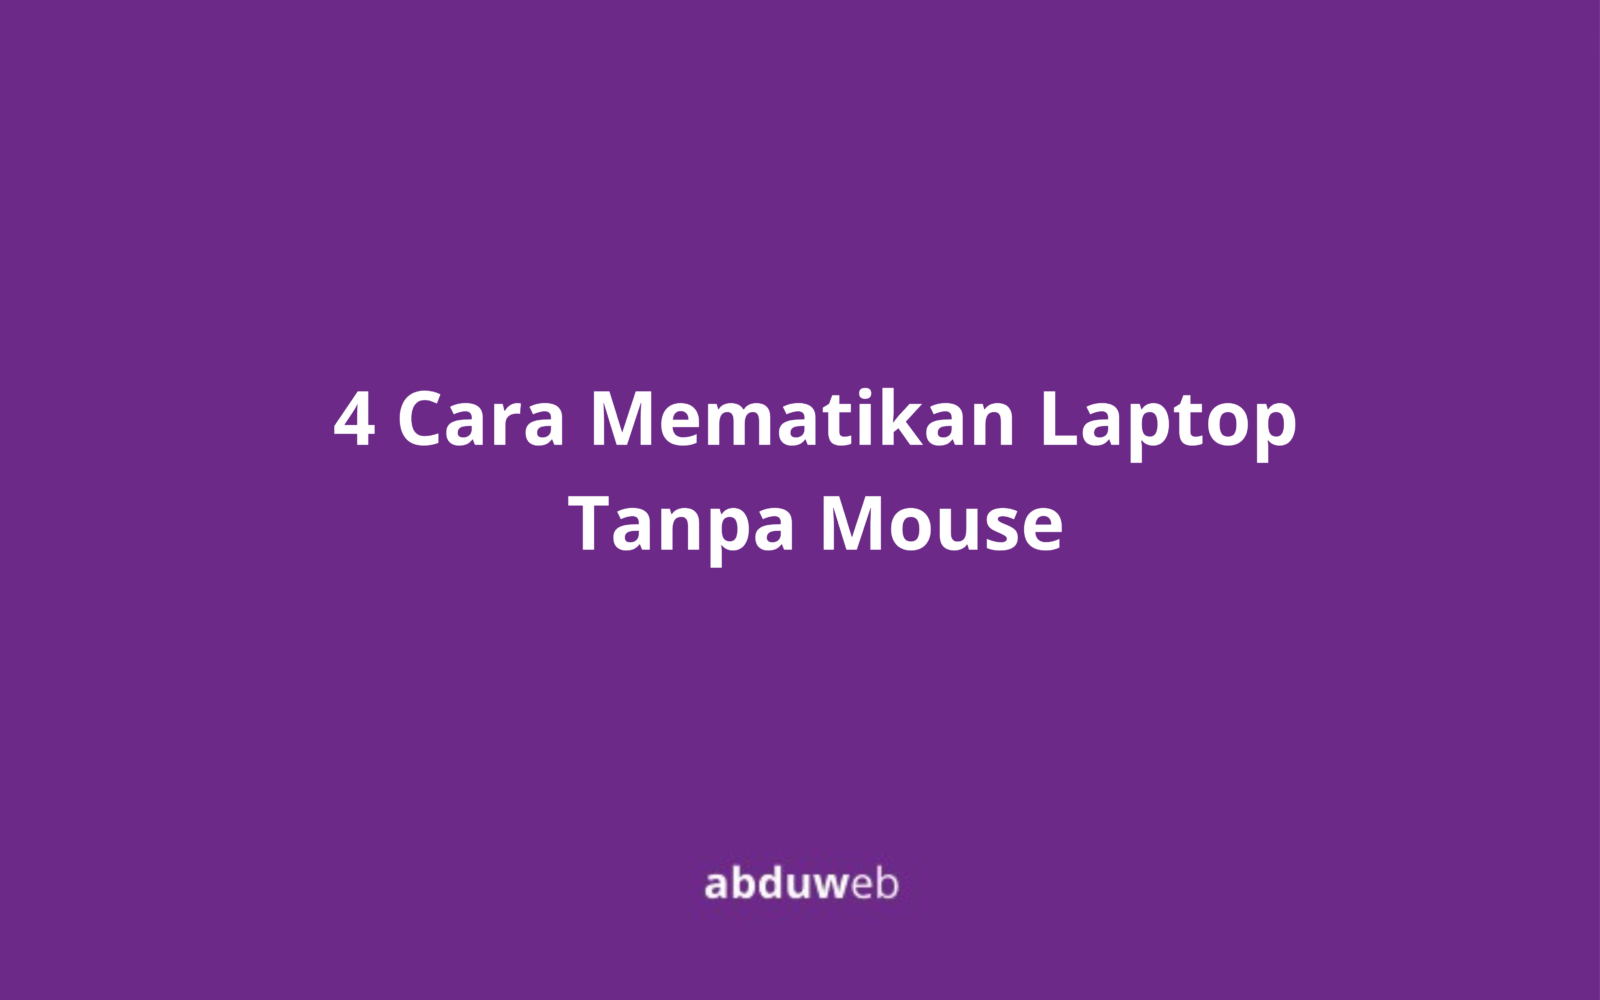 Cara Mematikan Laptop Tanpa Mouse